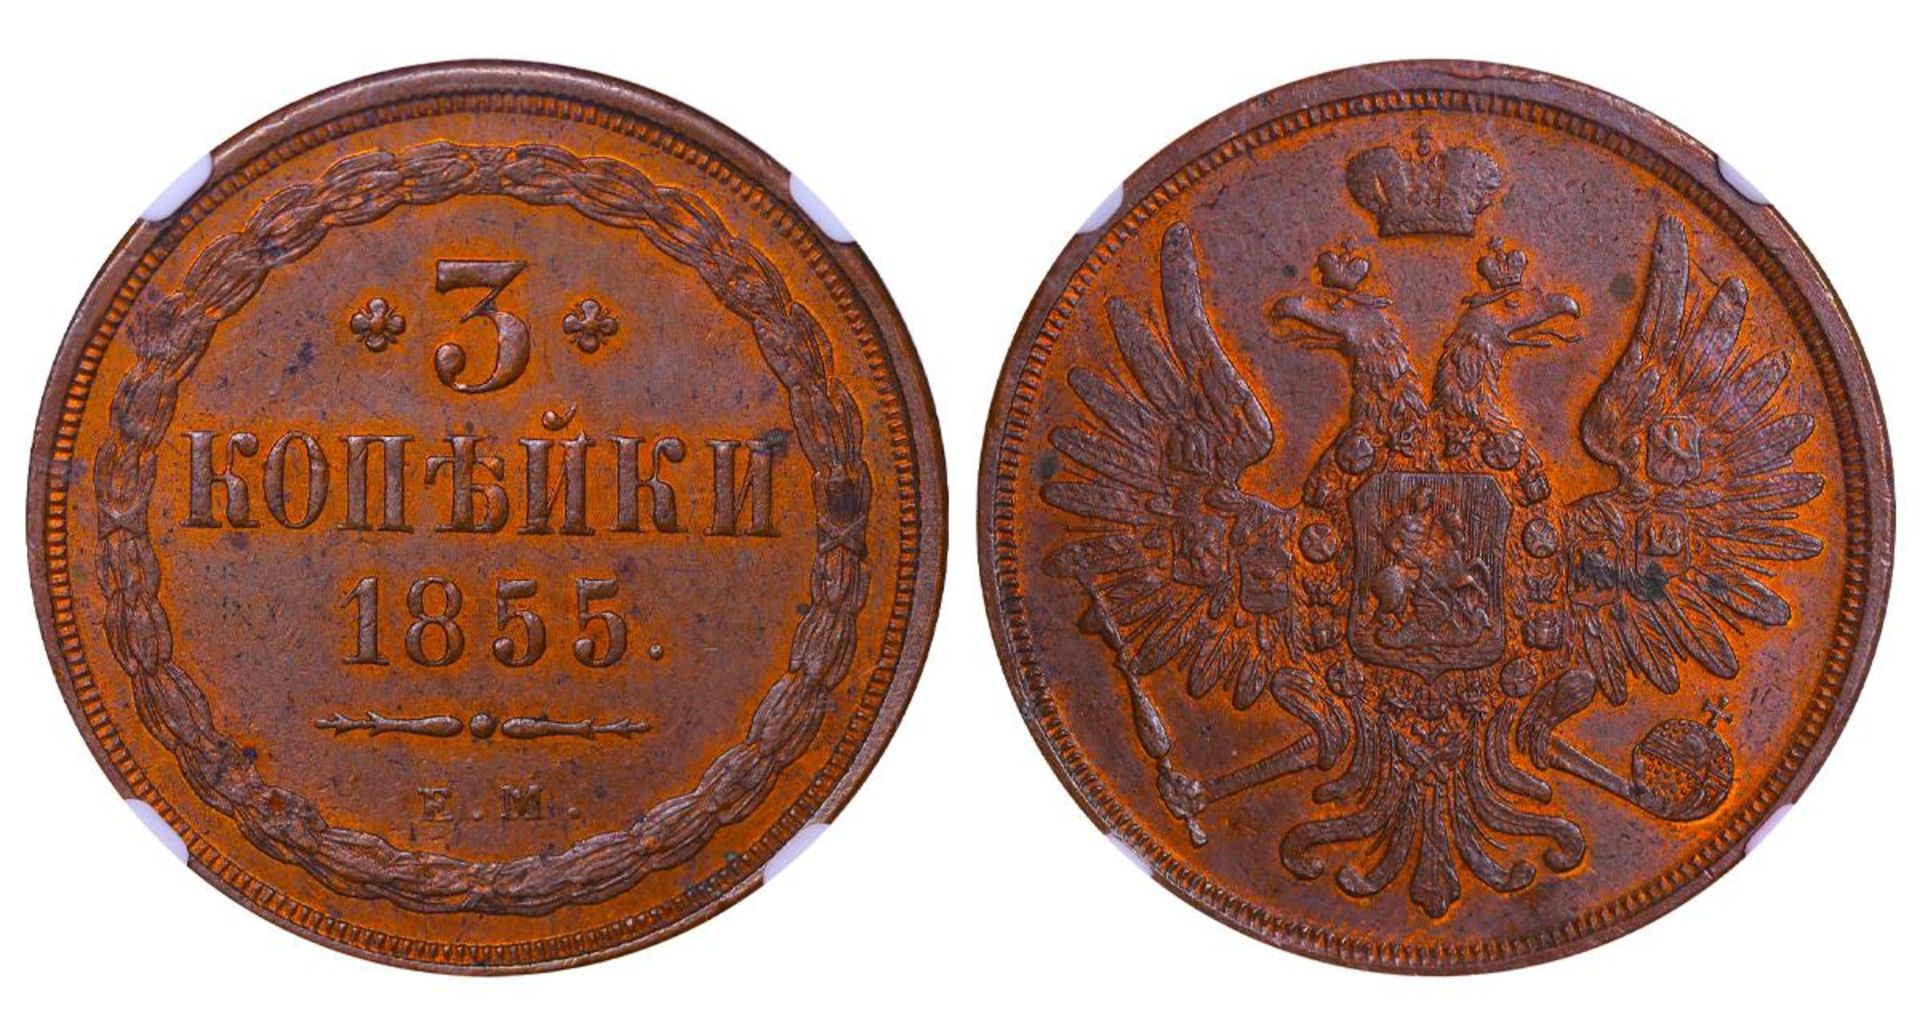 Russian Empire, 3 Kopecks, 1855 year, EM, NGC, MS 63 BN, Top-PoP